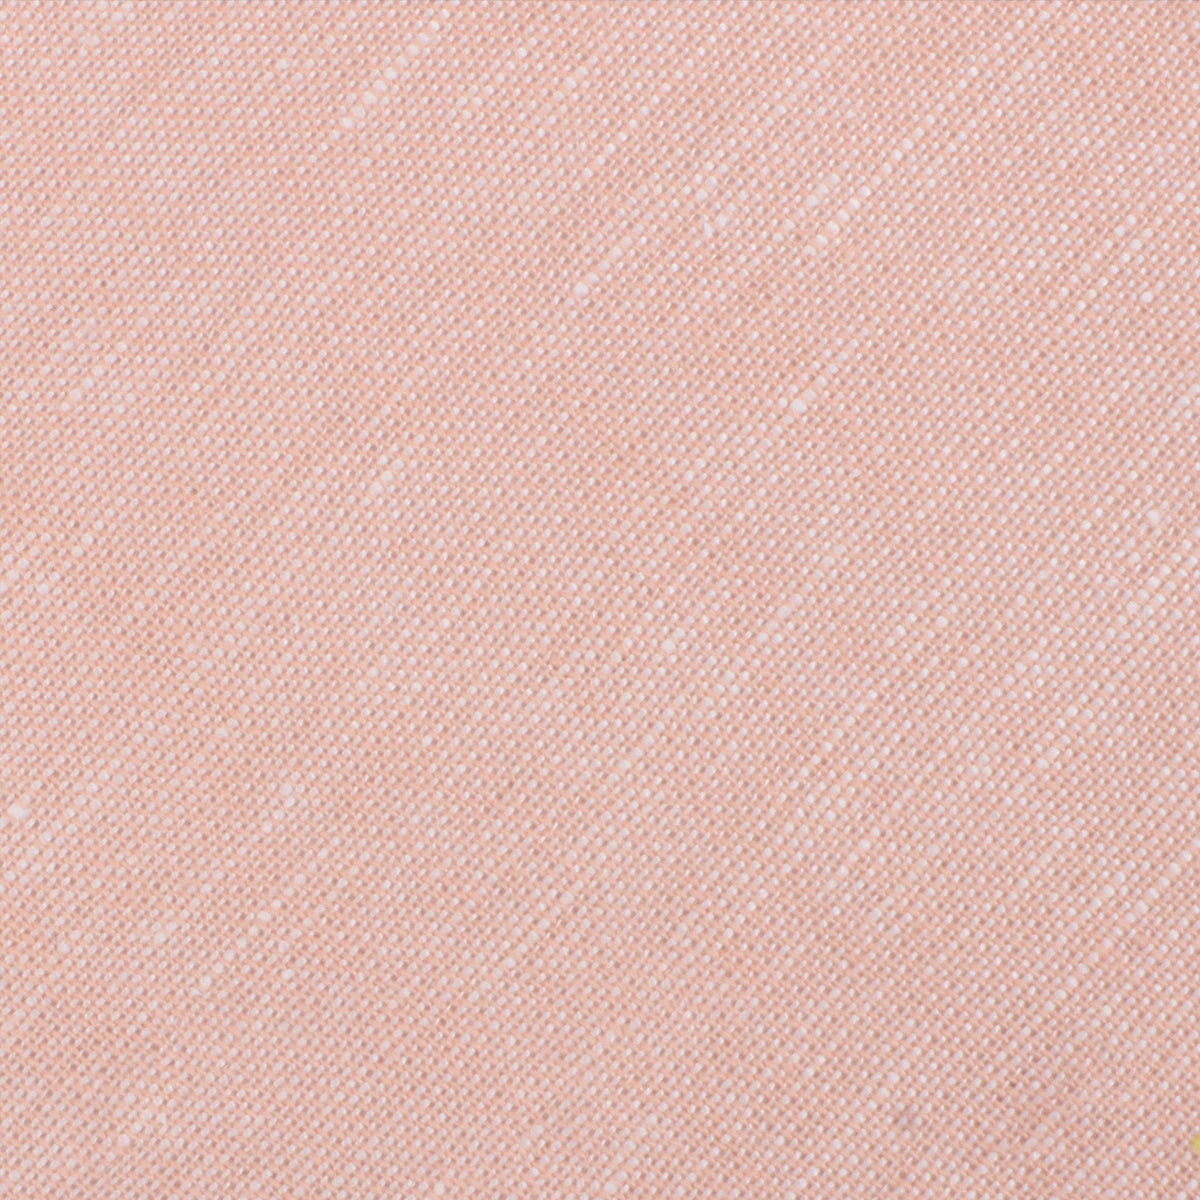 Ballet Blush Pink Chambray Linen Fabric Swatch